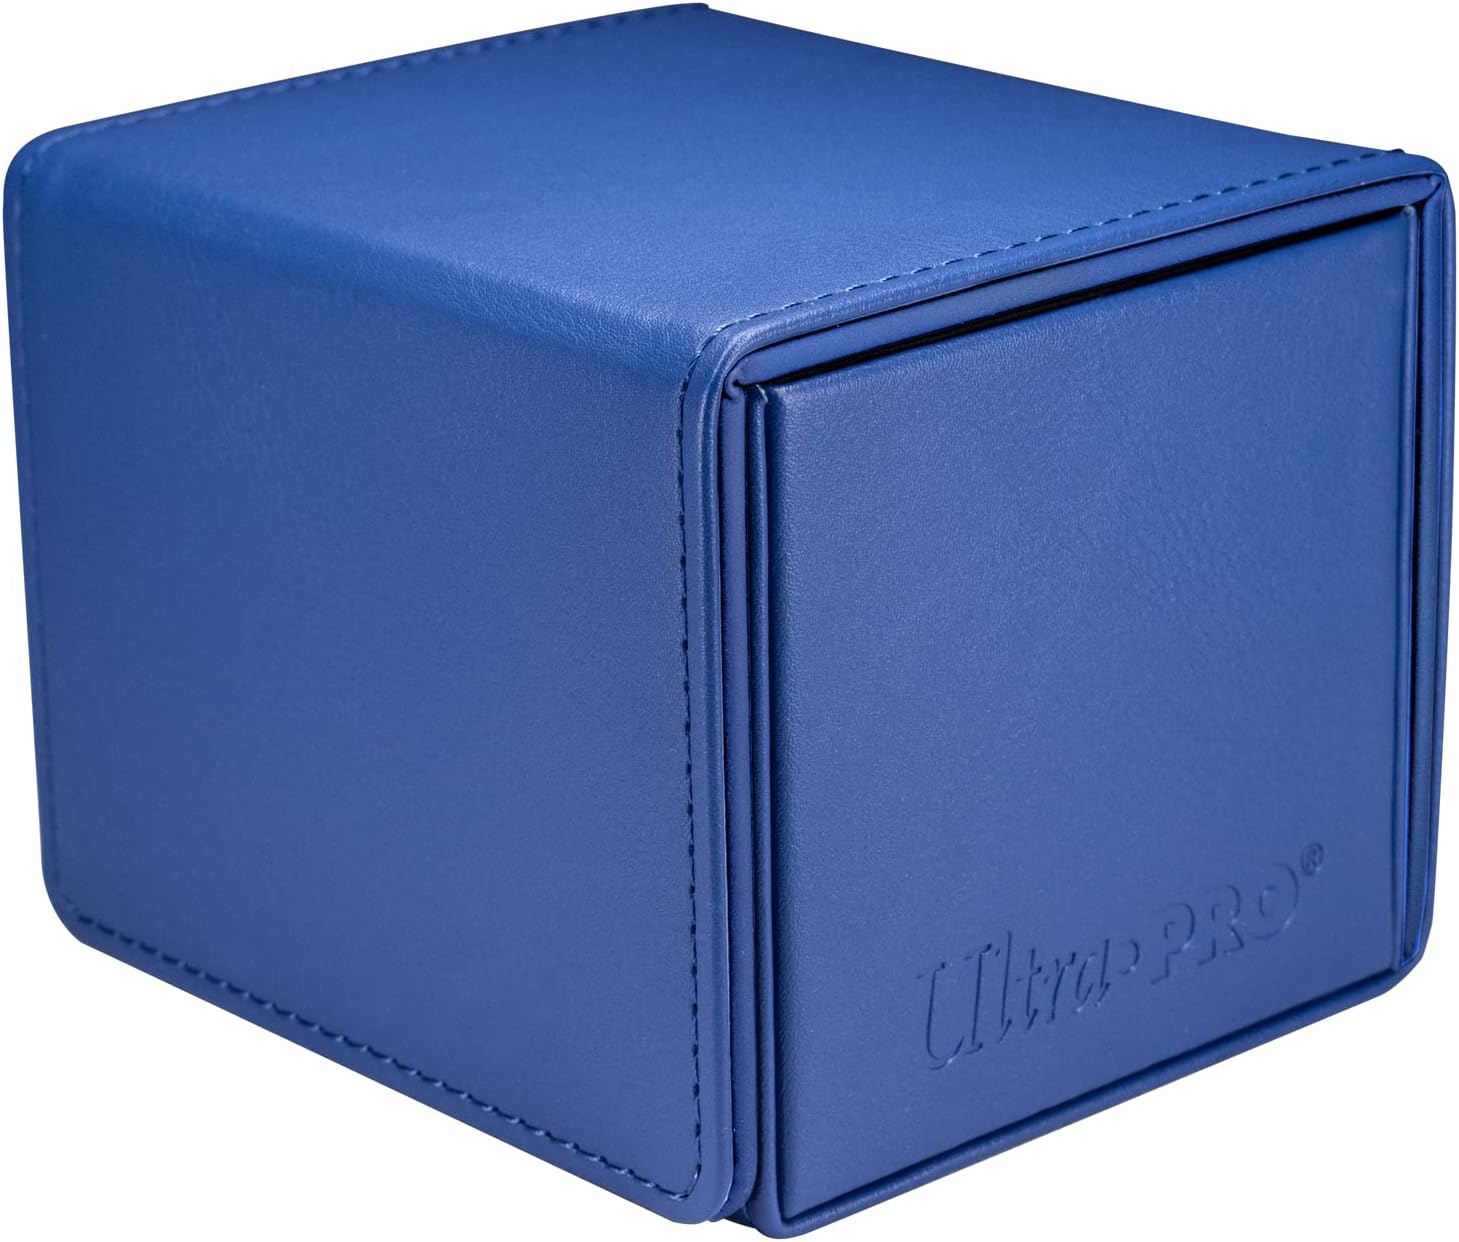 ULTRA PRO DECK BOX: VIVID EDGE BLUE